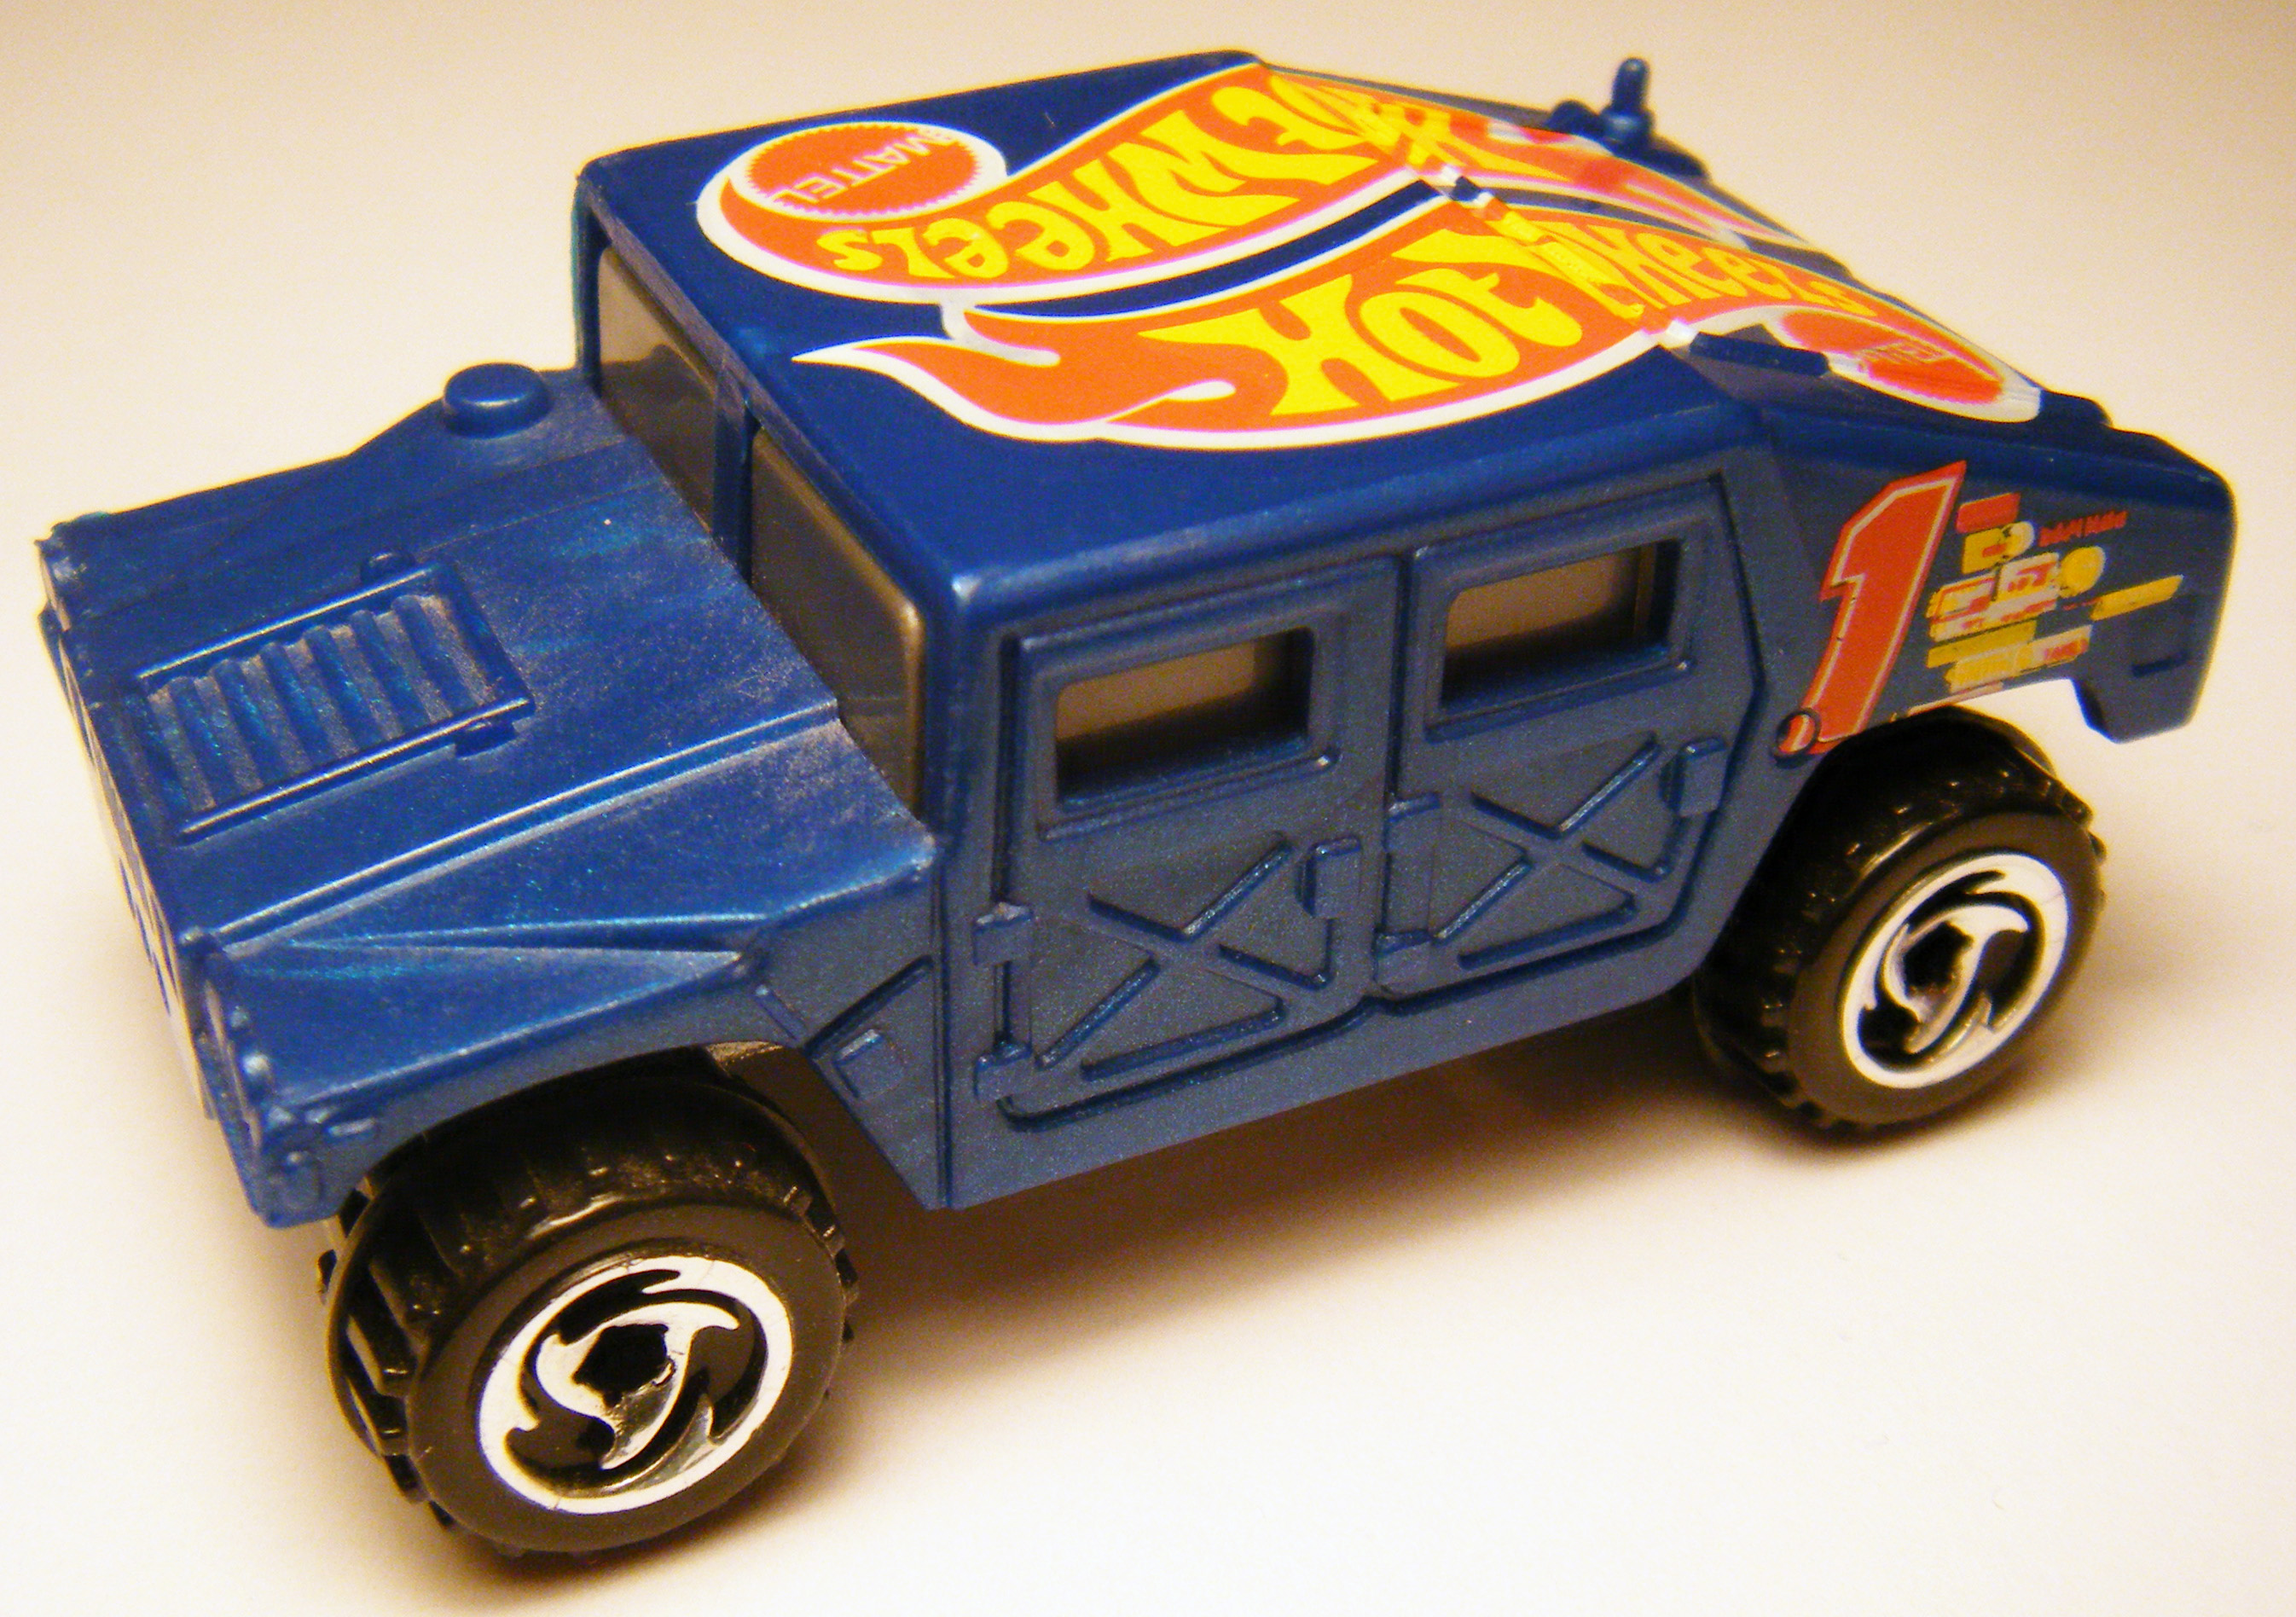 Mattel Hot Wheels® Monster Trucks Red Racing 3 Vehicle, 1 ct - Kroger